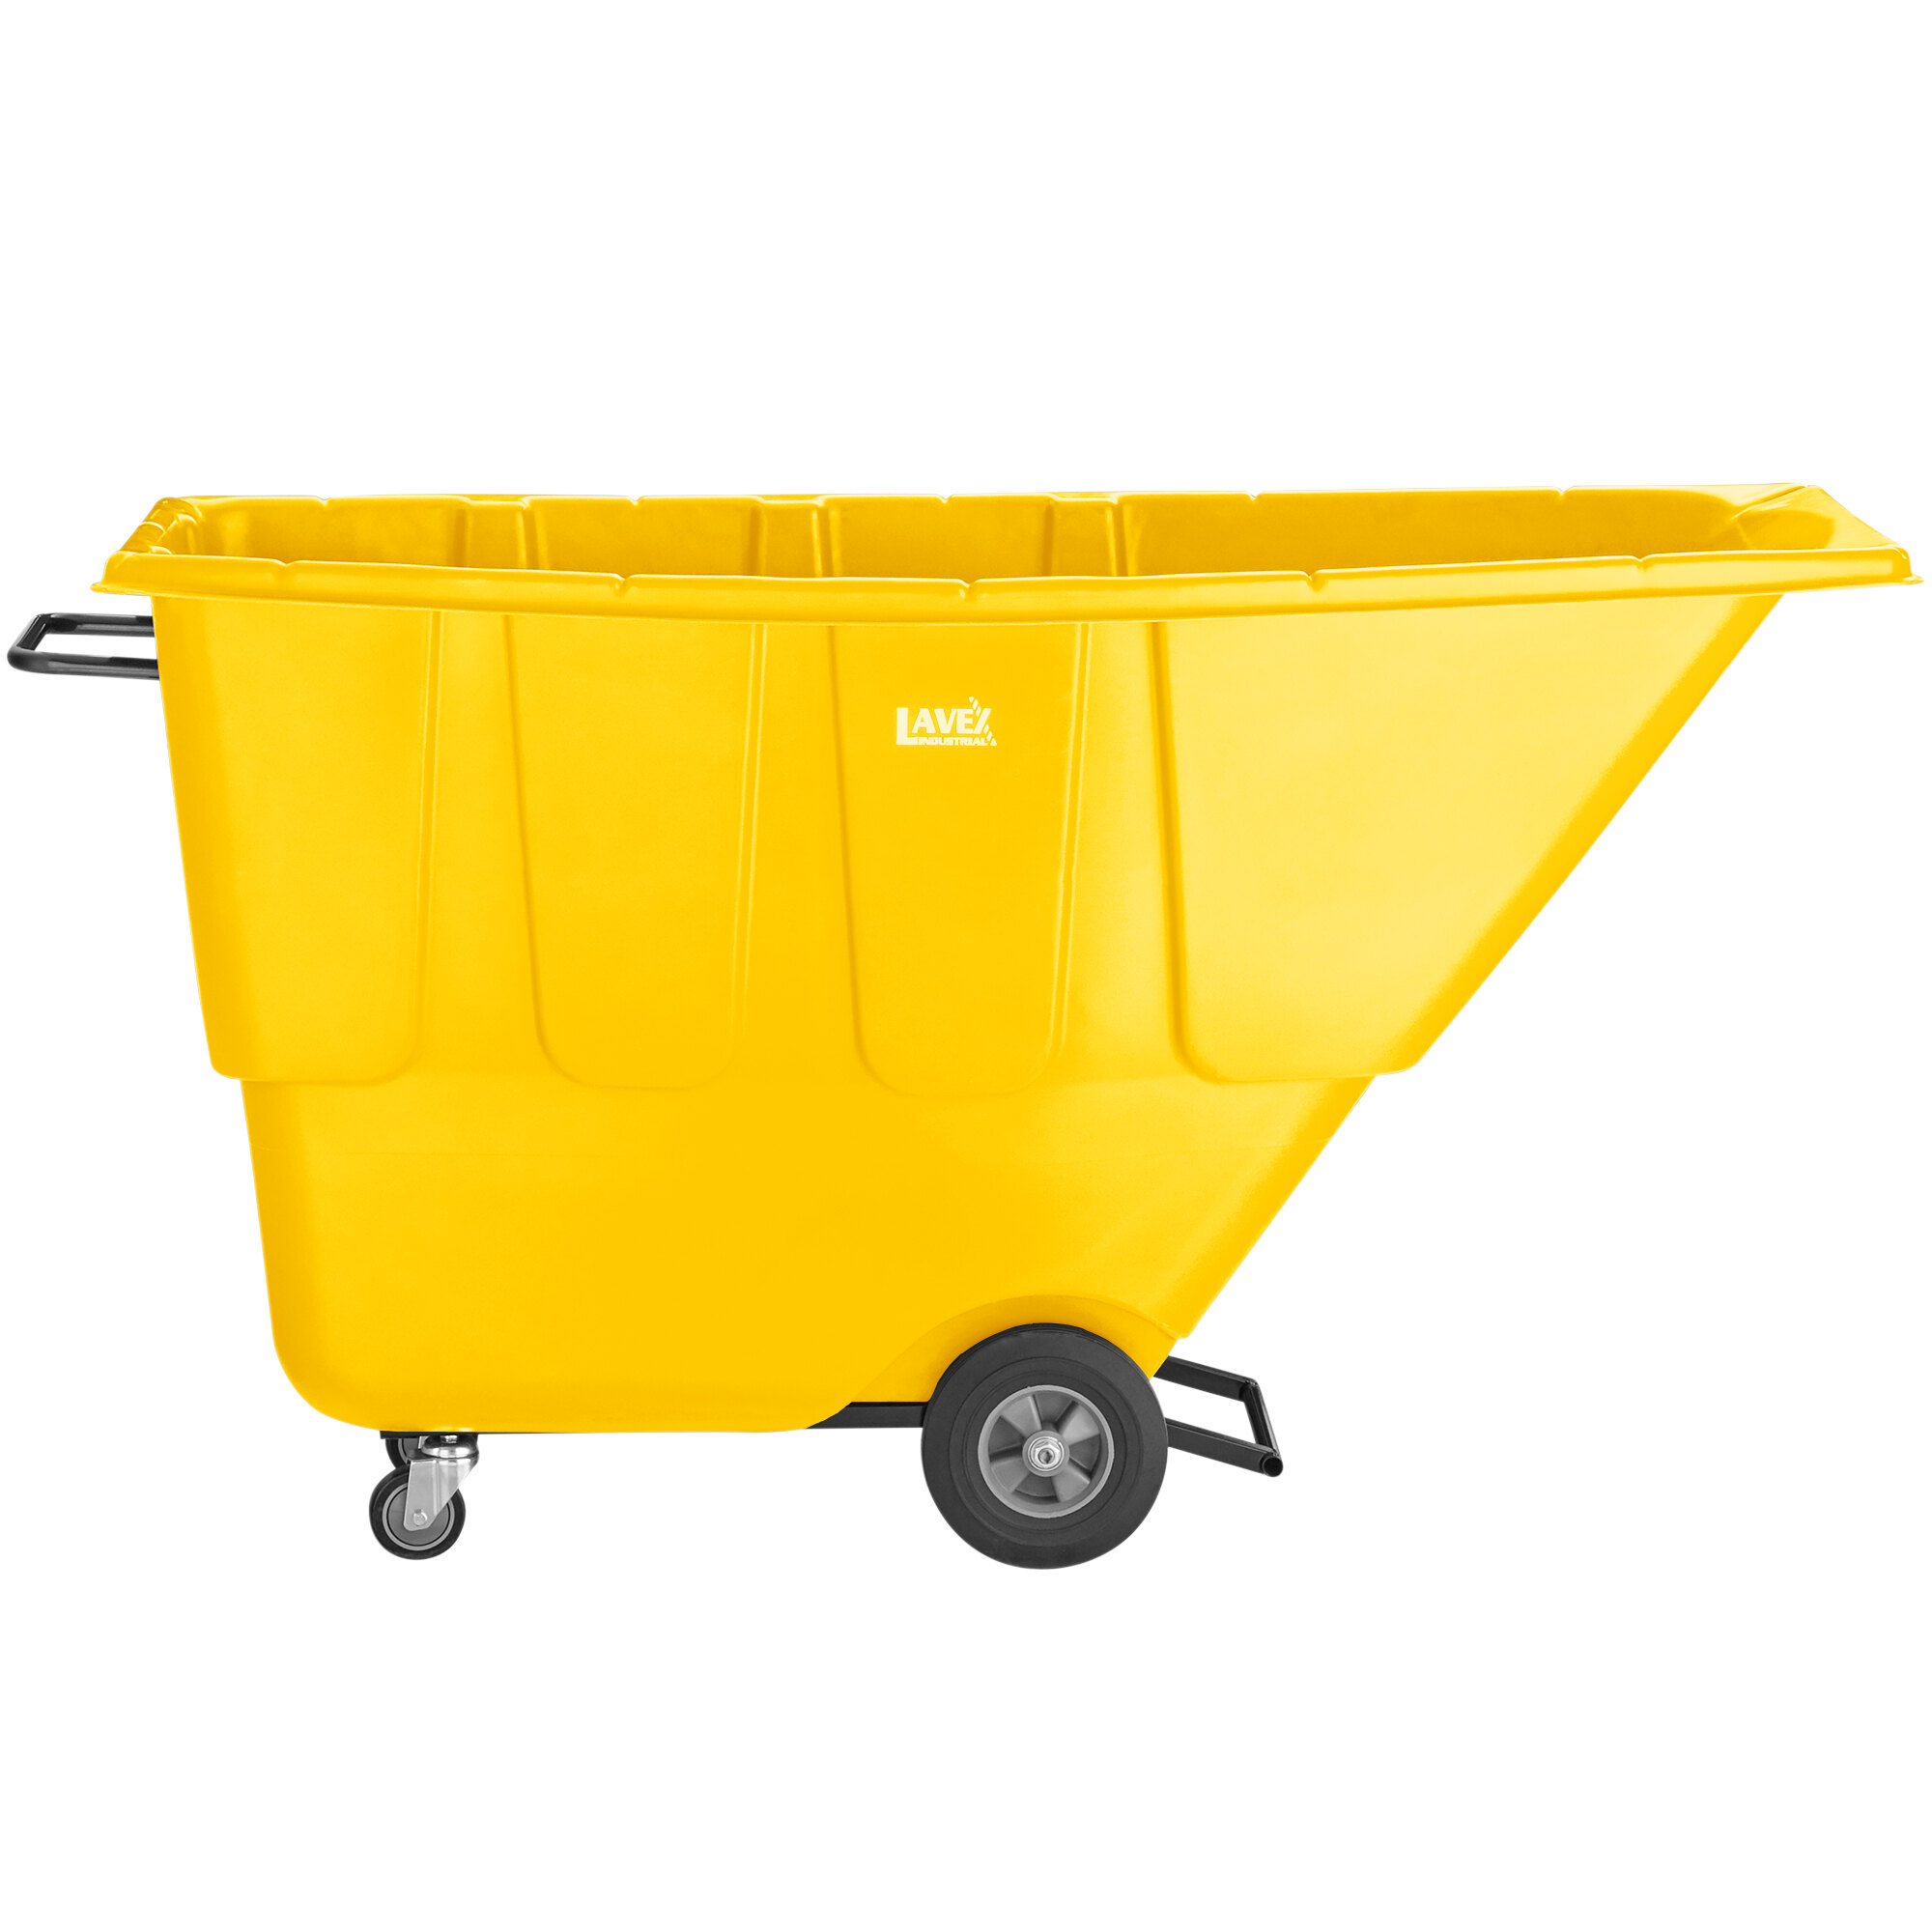 yellow garbage truck